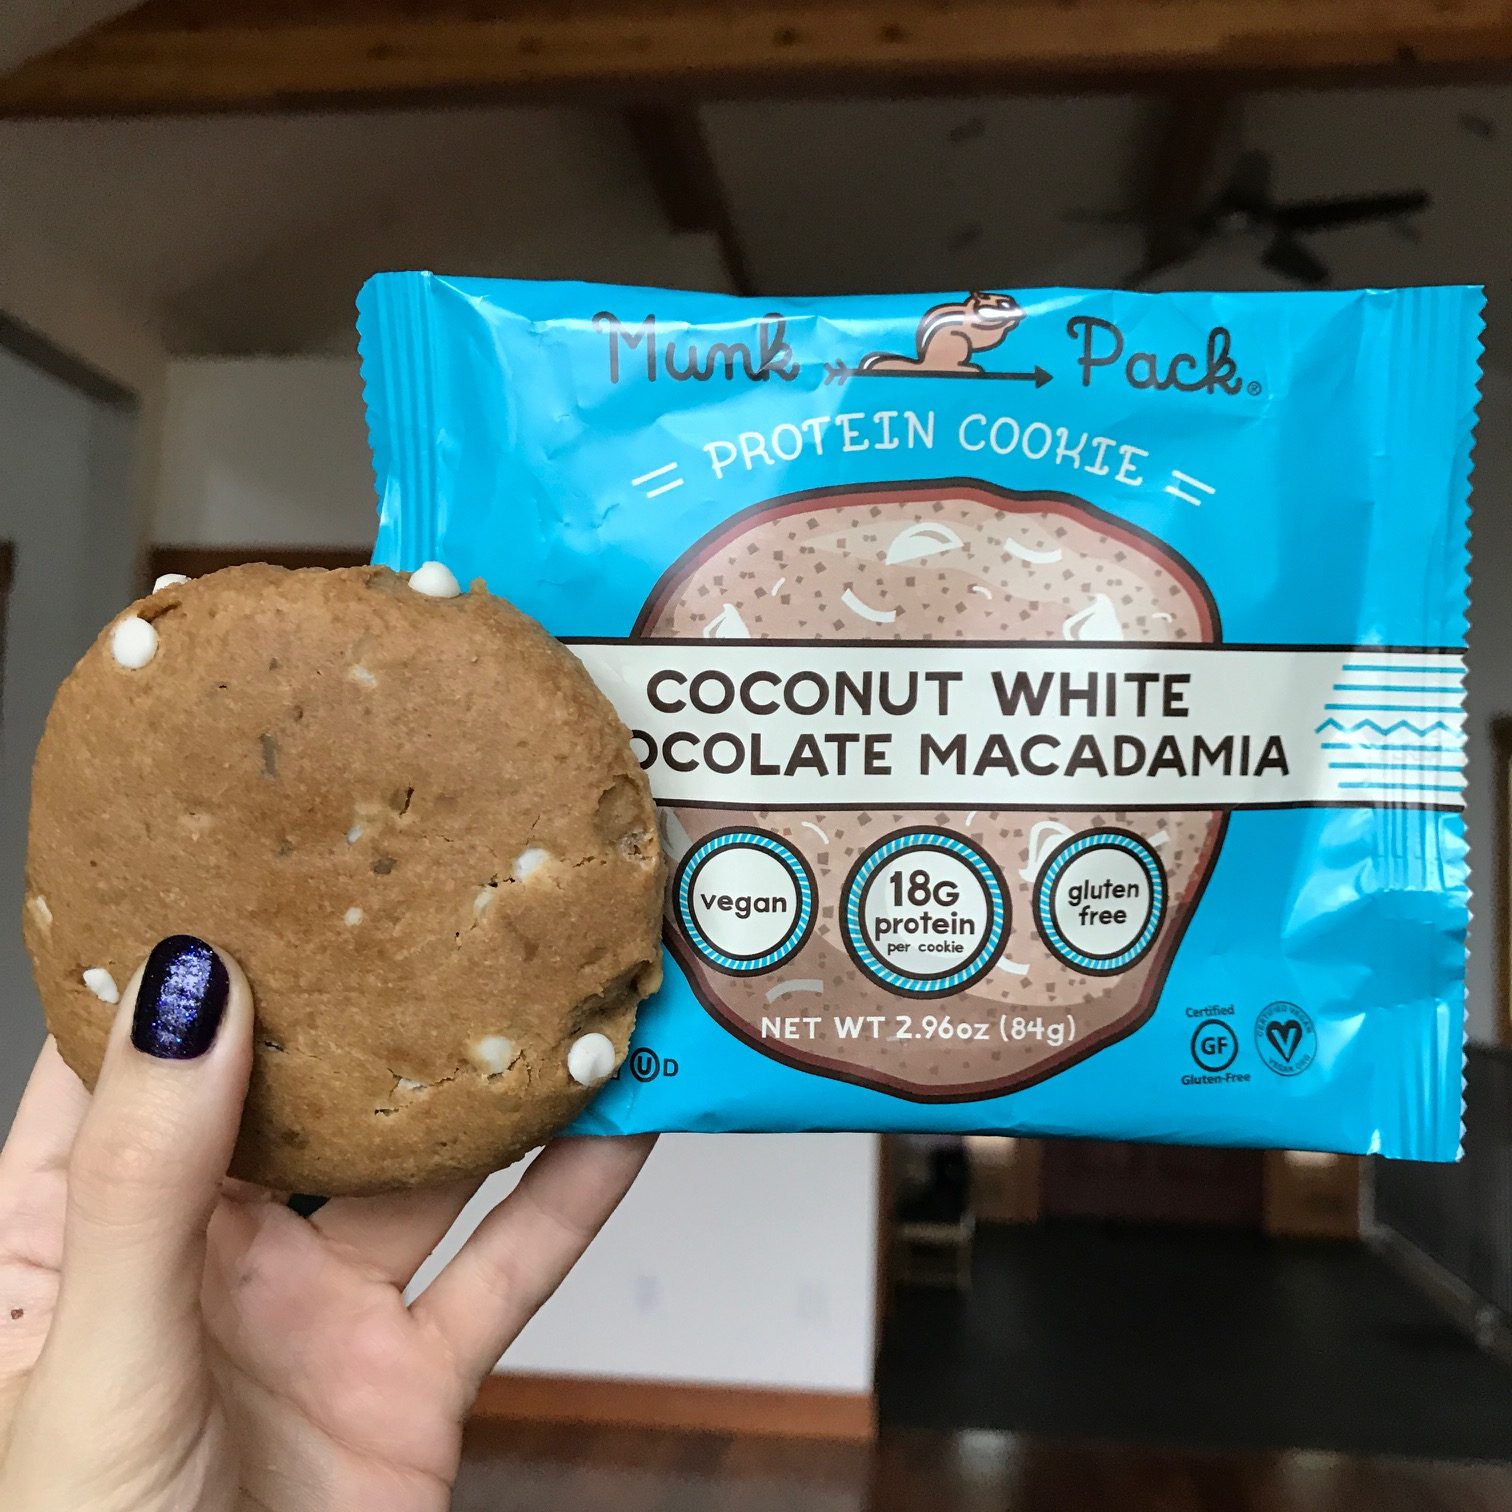 Munk Pack protein cookie